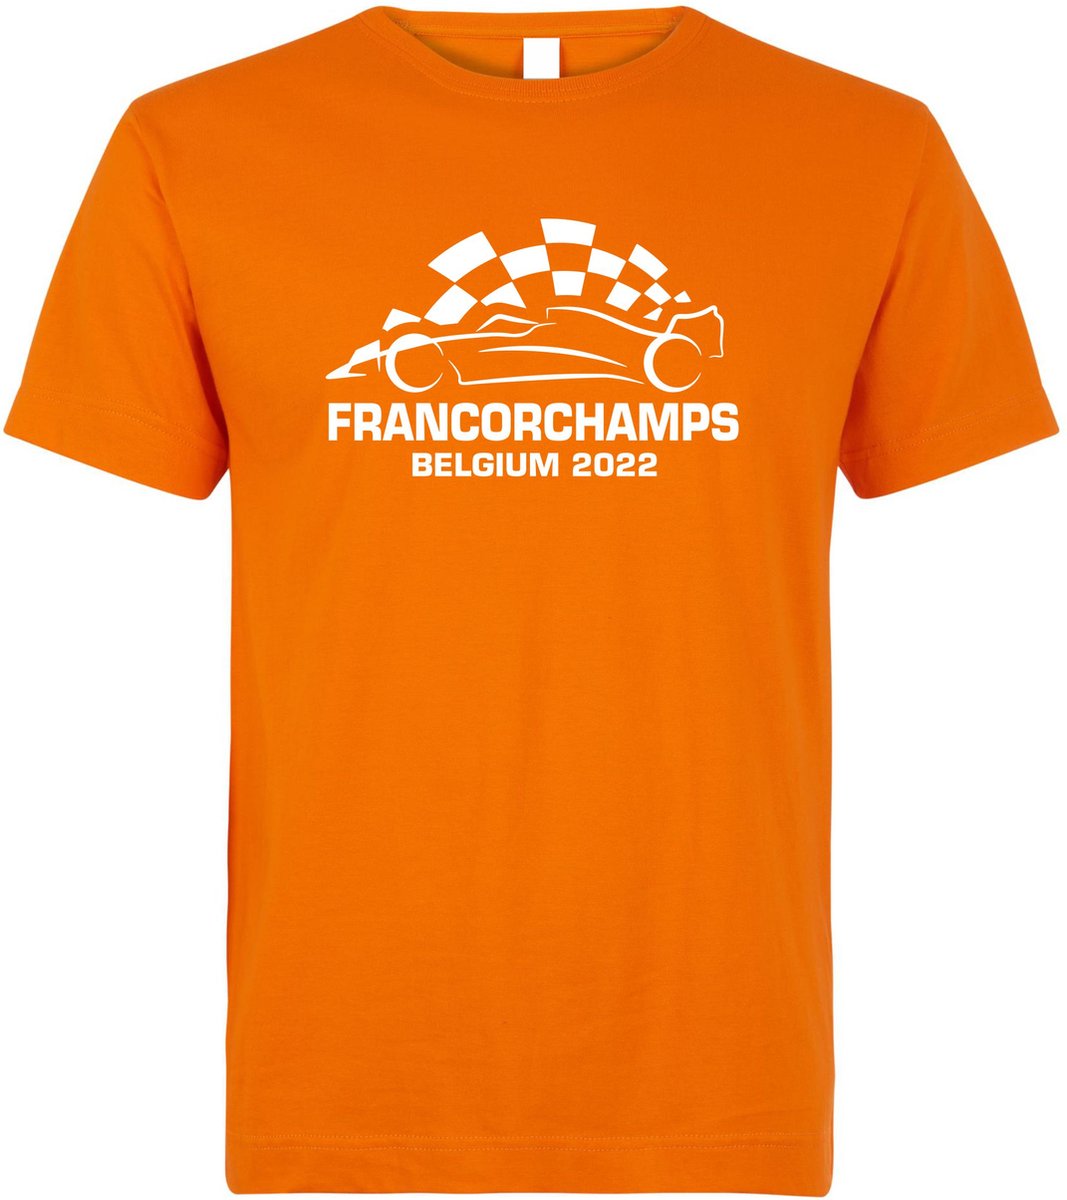 T-shirt Francorchamps Belgium 2022 met raceauto | Max Verstappen / Red Bull Racing / Formule 1 fan | Grand Prix Circuit Spa-Francorchamps | kleding shirt | Oranje | maat 3XL